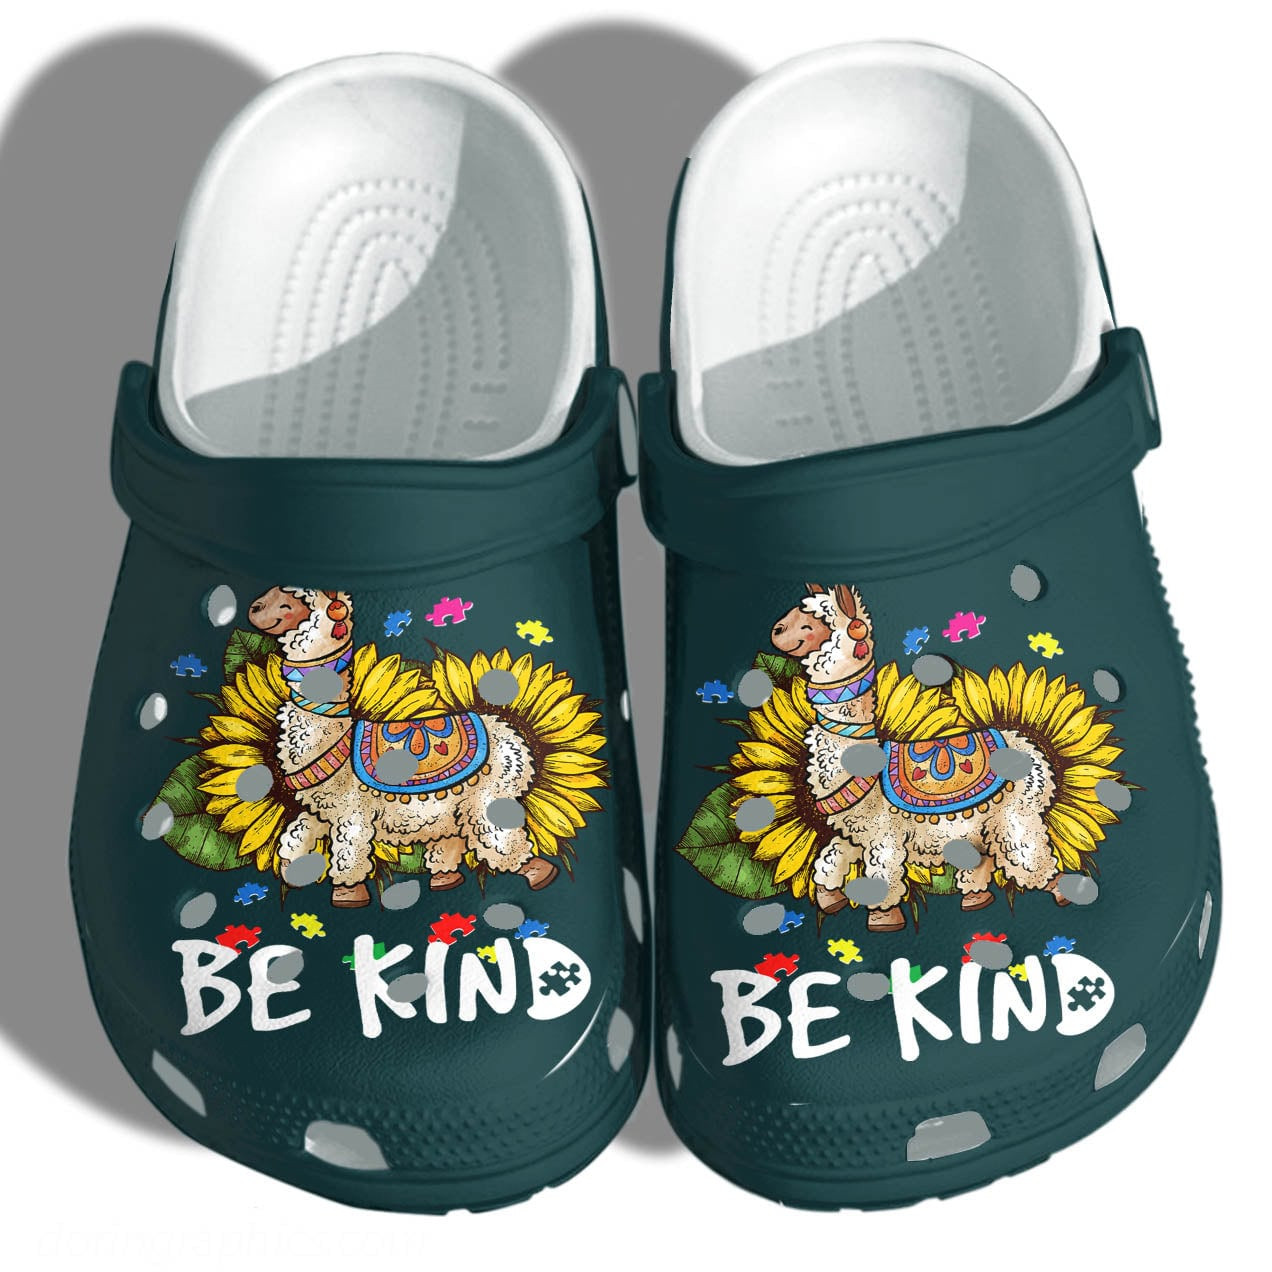 Autism Awareness Crocs Llama Sunflower Be Kind Crocband Clog Shoes For Men Women